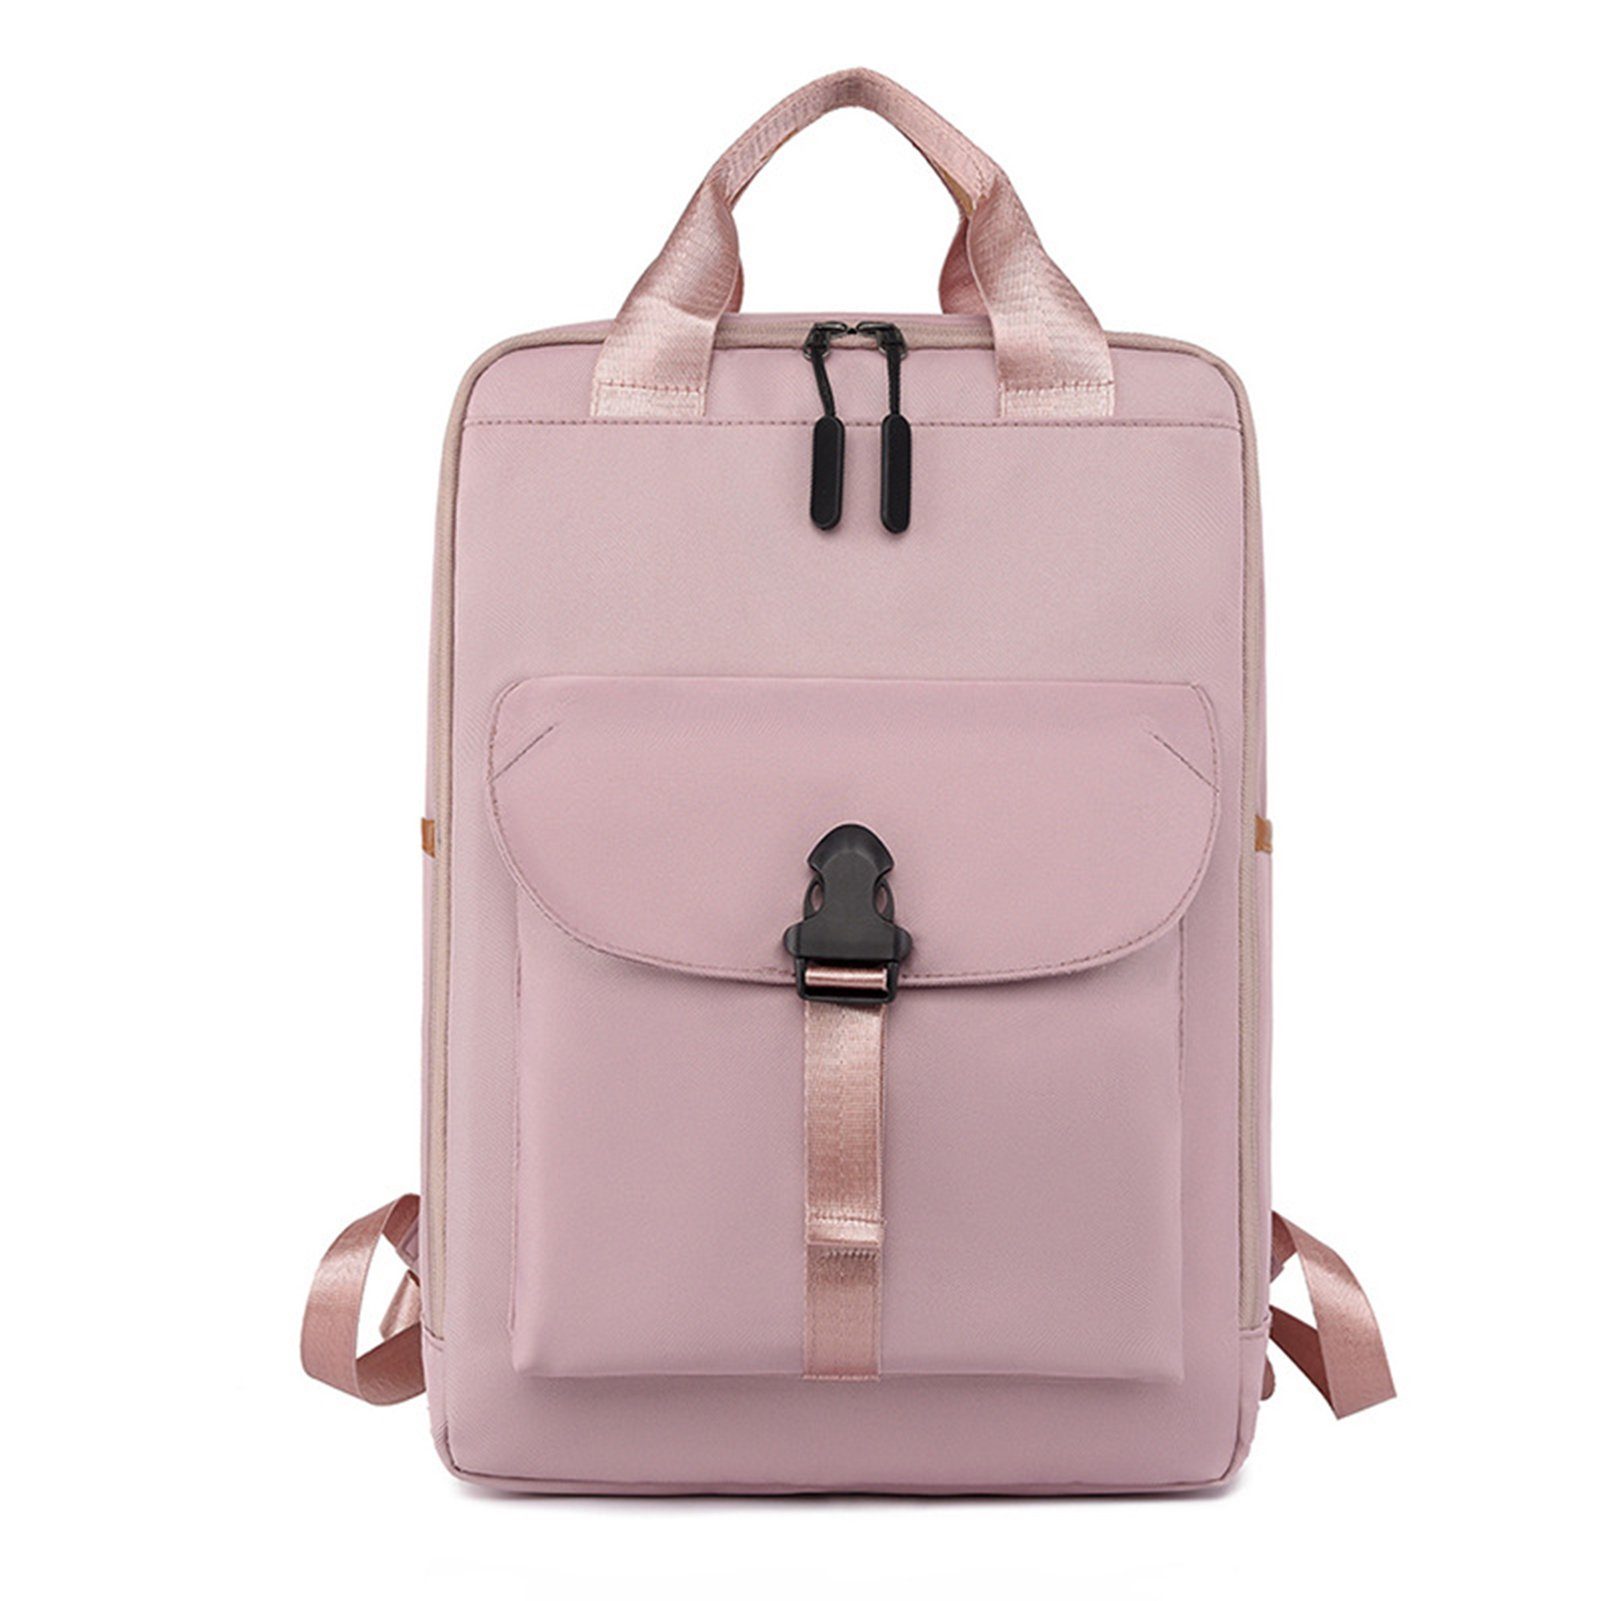 Freizeitrucksack Mode-Reiserucksack, Rucksack pink Blusmart Rucksack, Backpack, Großes Damen